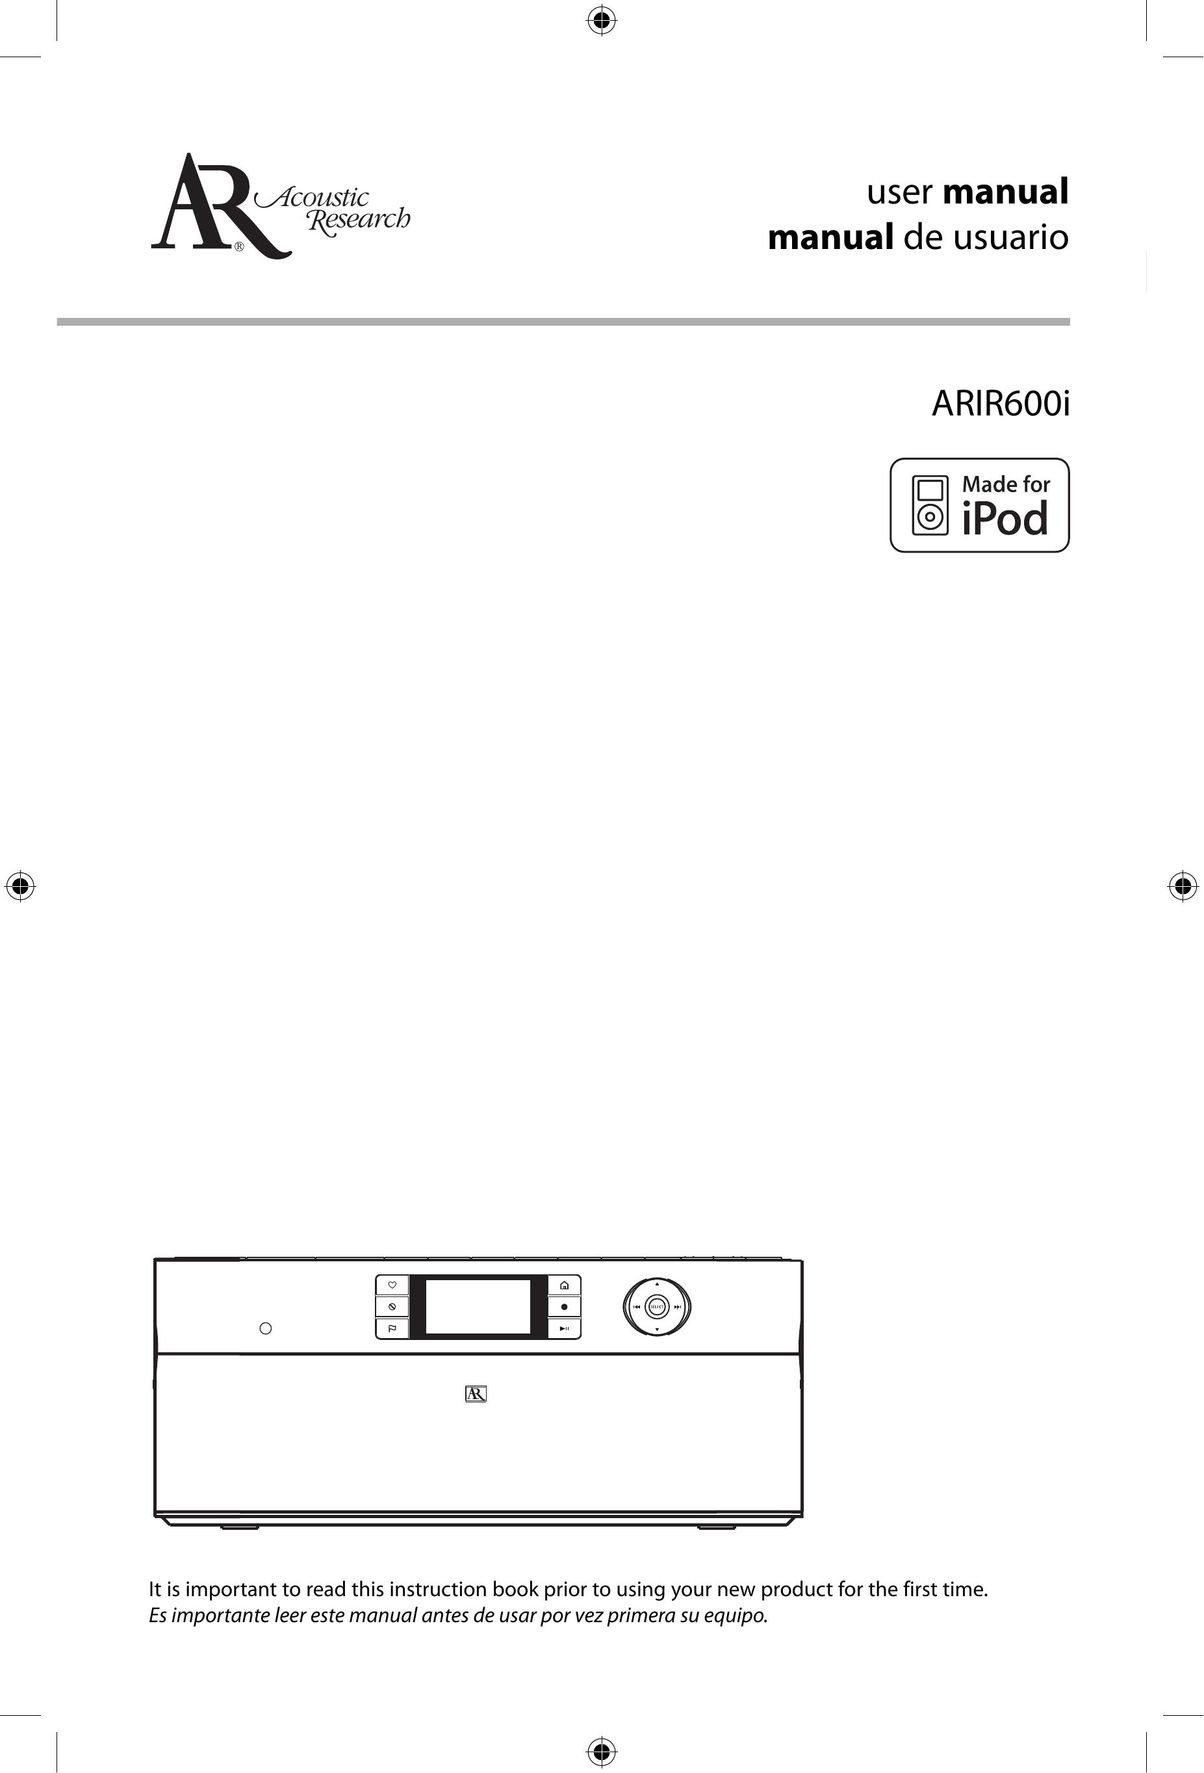 Acoustic Research ARIR600i Radio User Manual